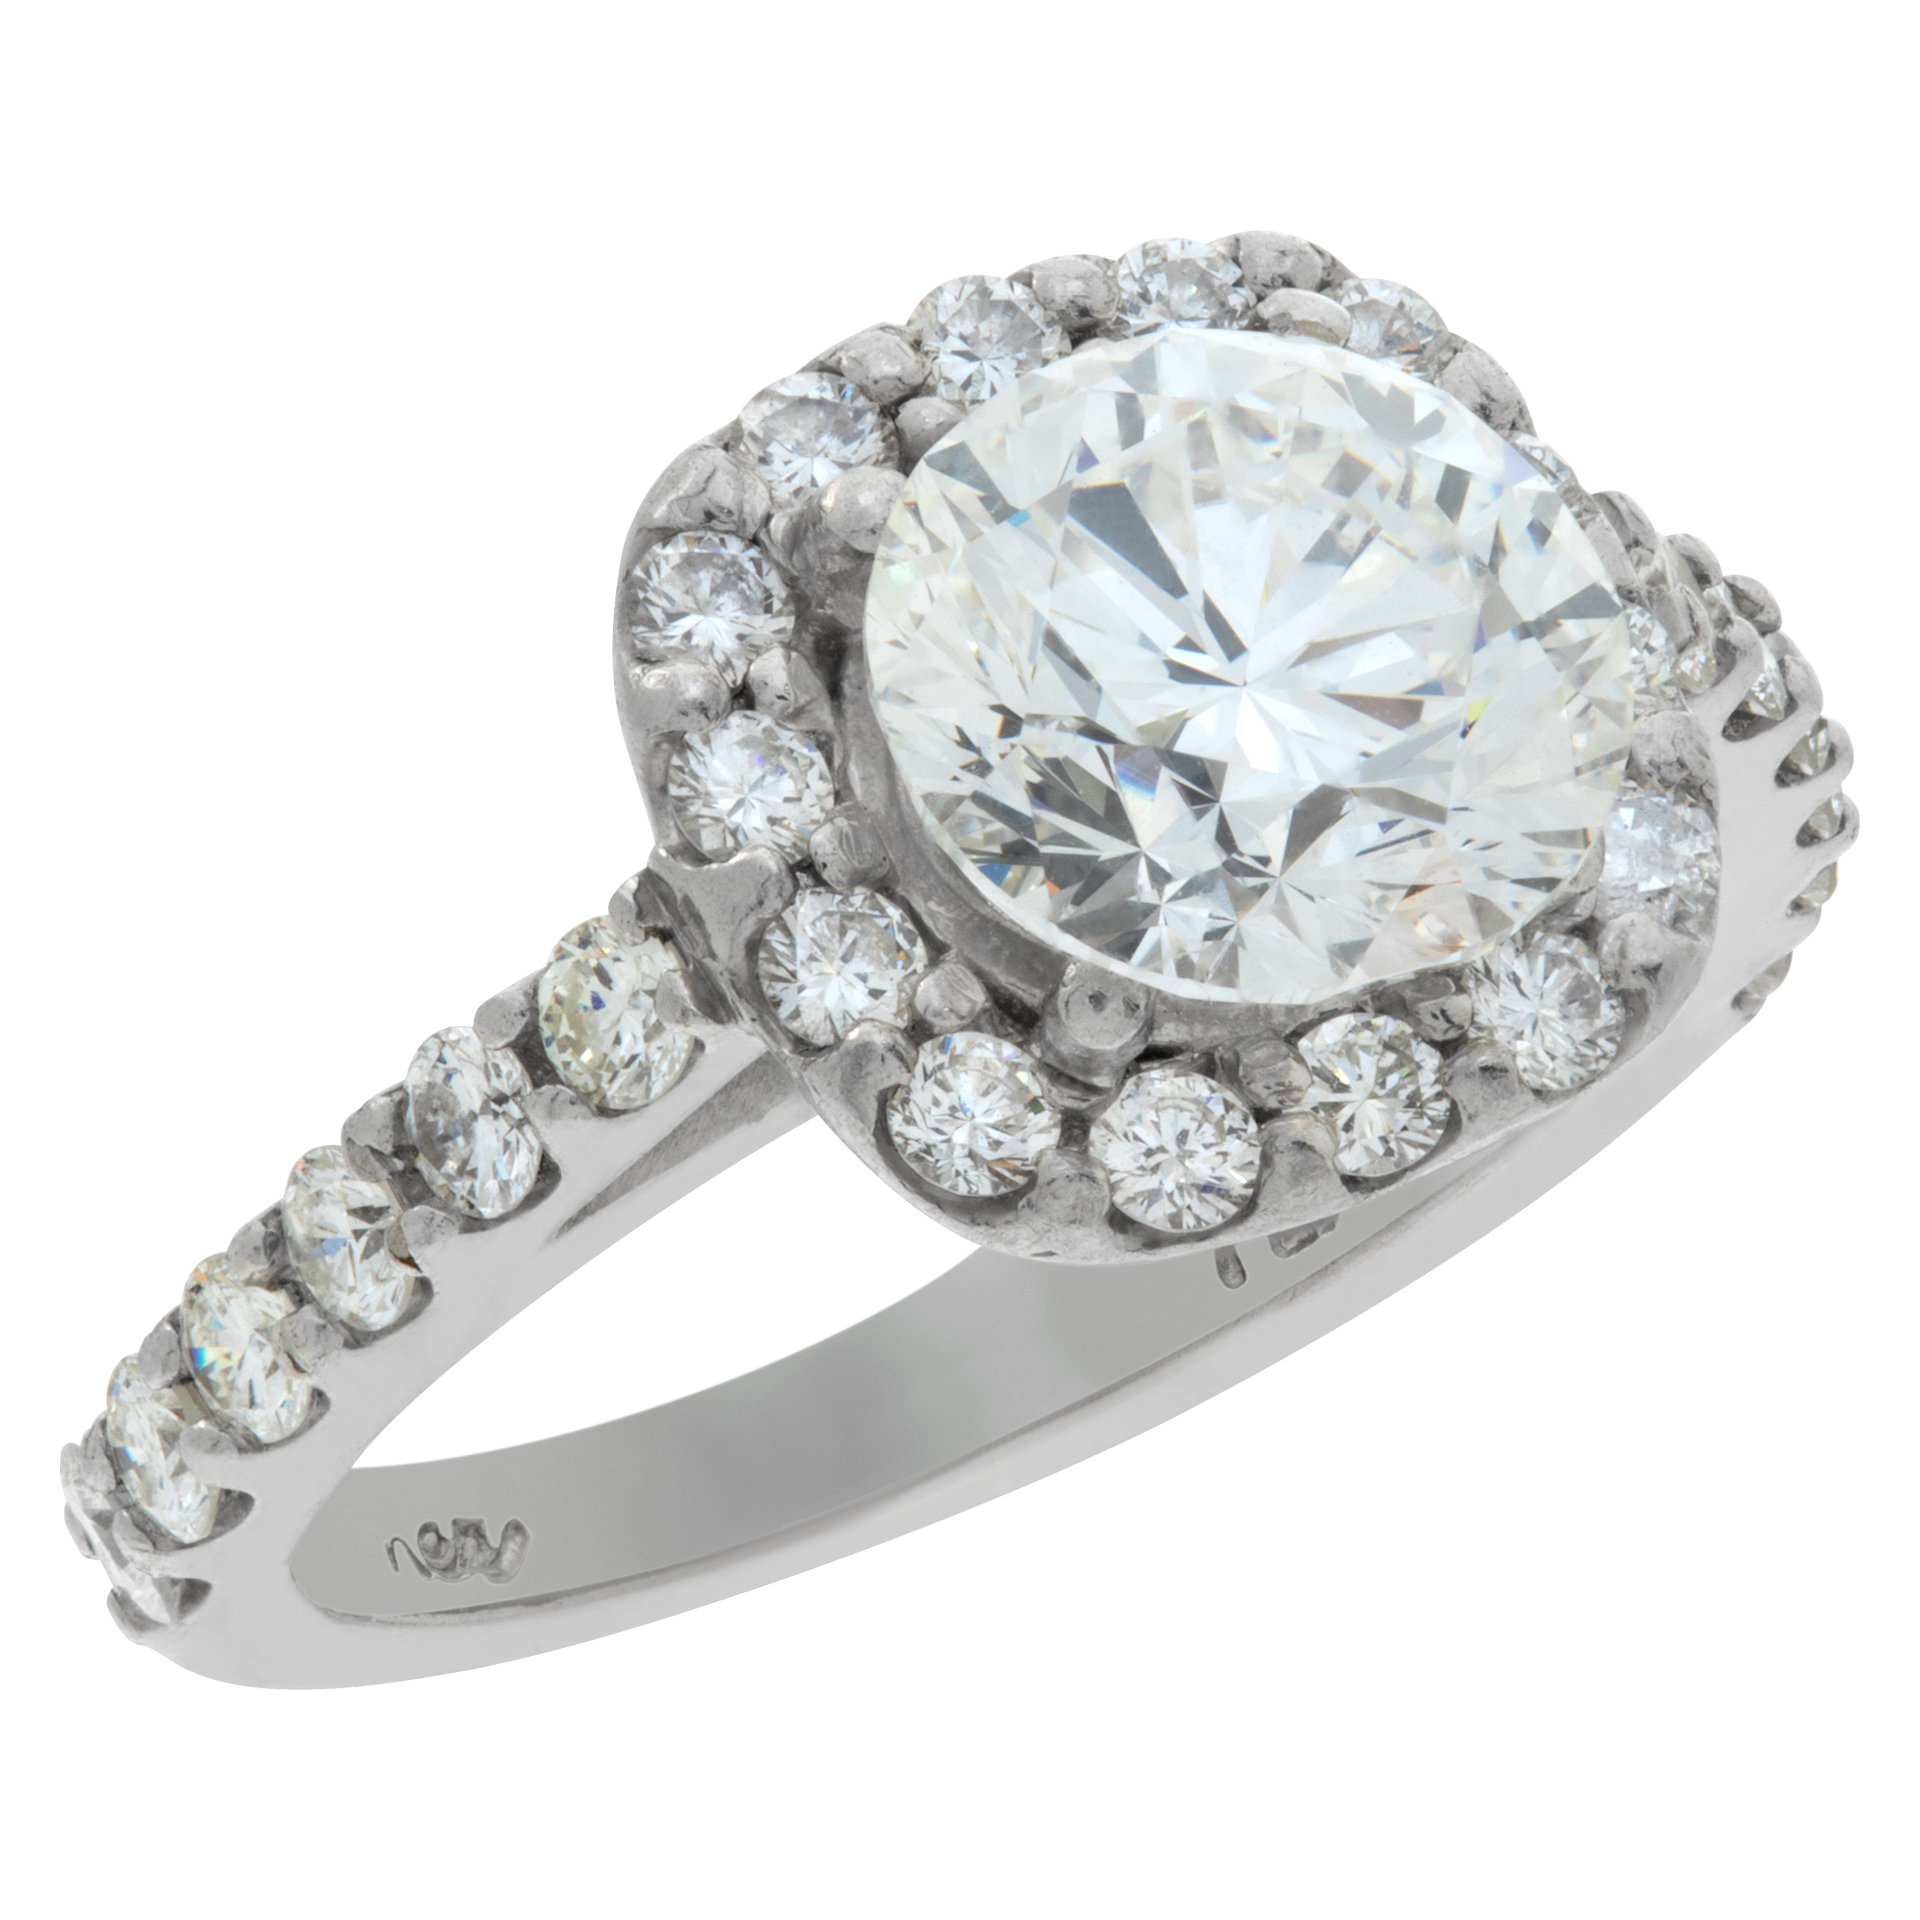 GIA certified round brilliant cut diamond 2.03 carat ( I color, SI1 clarity) ring set in platrinum image 3